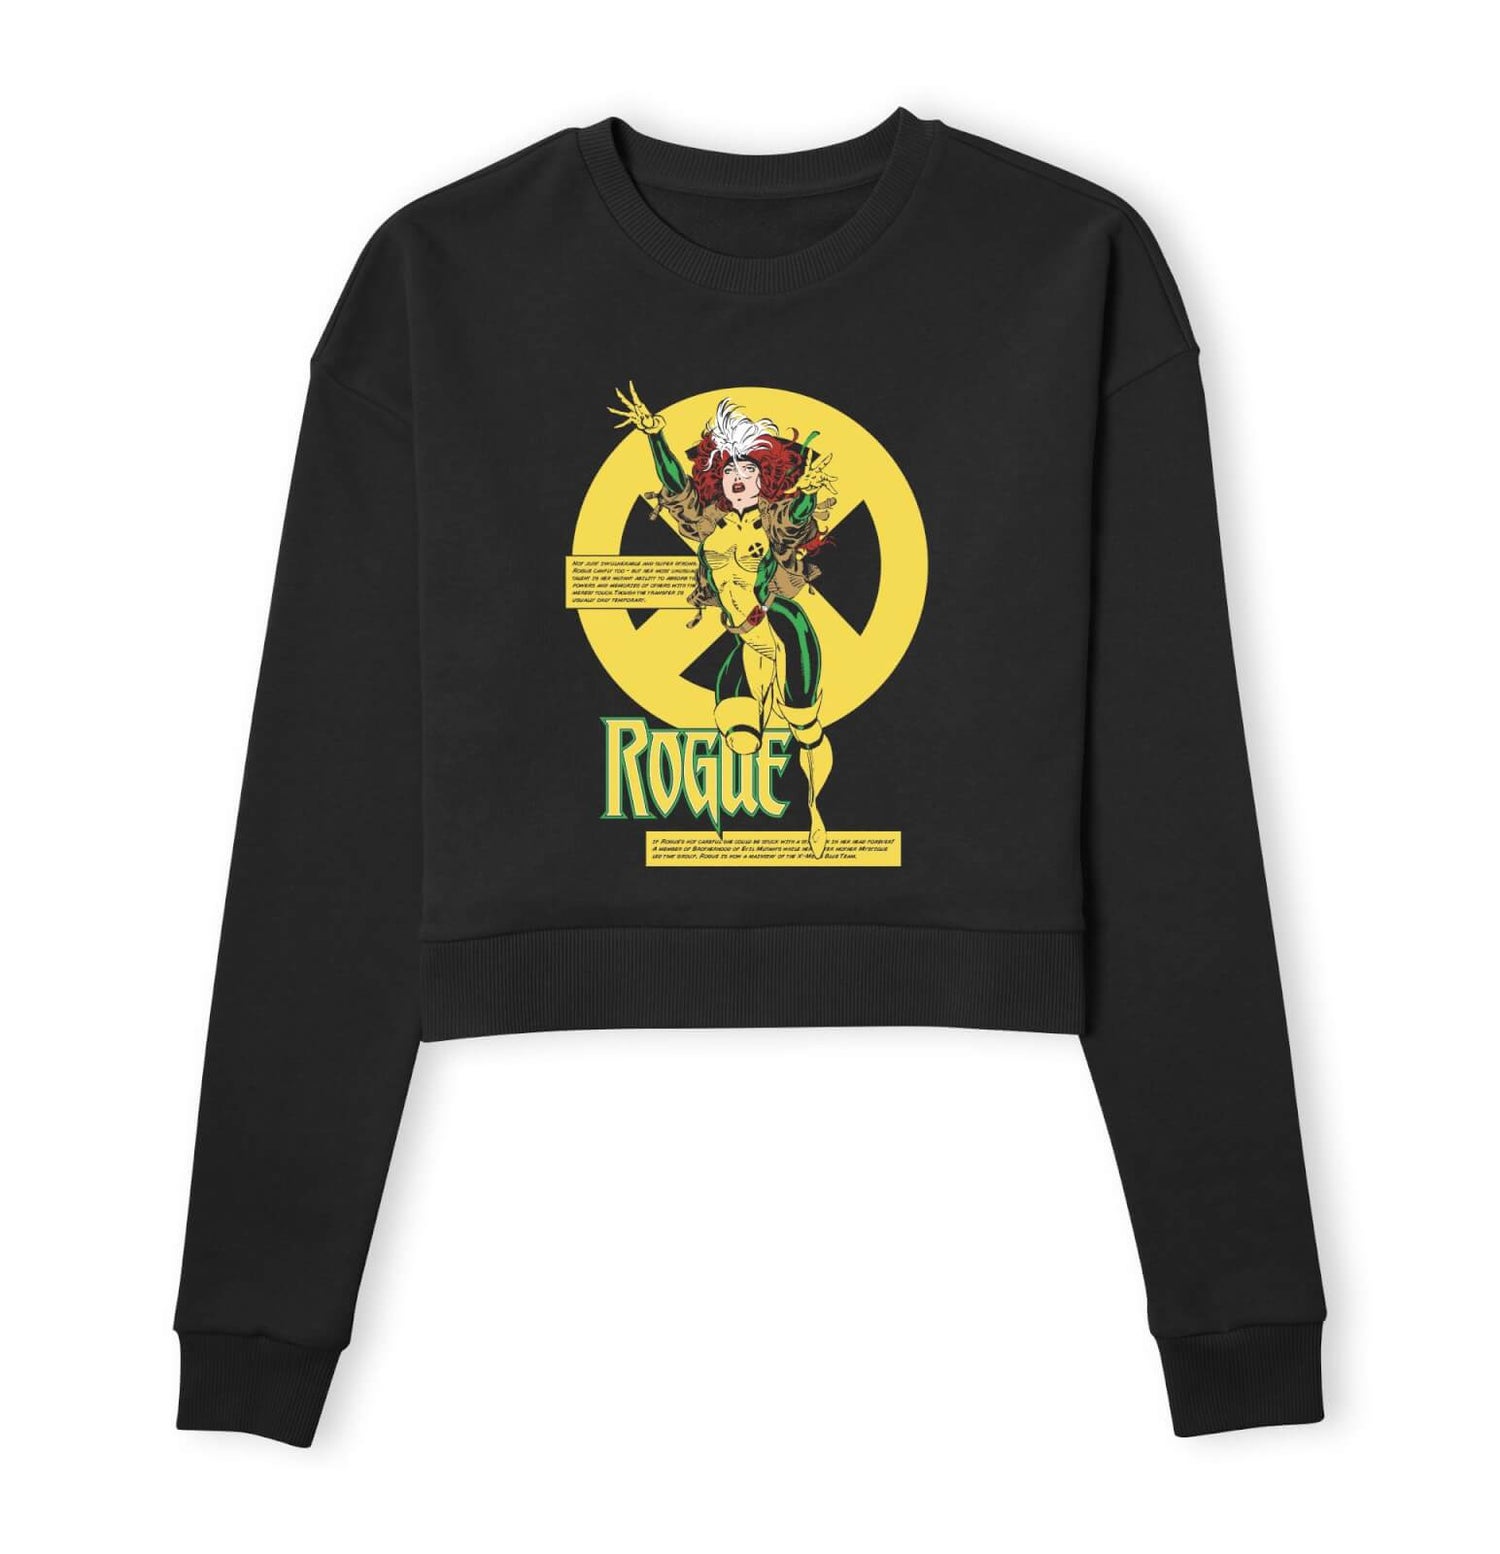 X-Men Rogue Bio Drk Women's Cropped Sweatshirt - Black